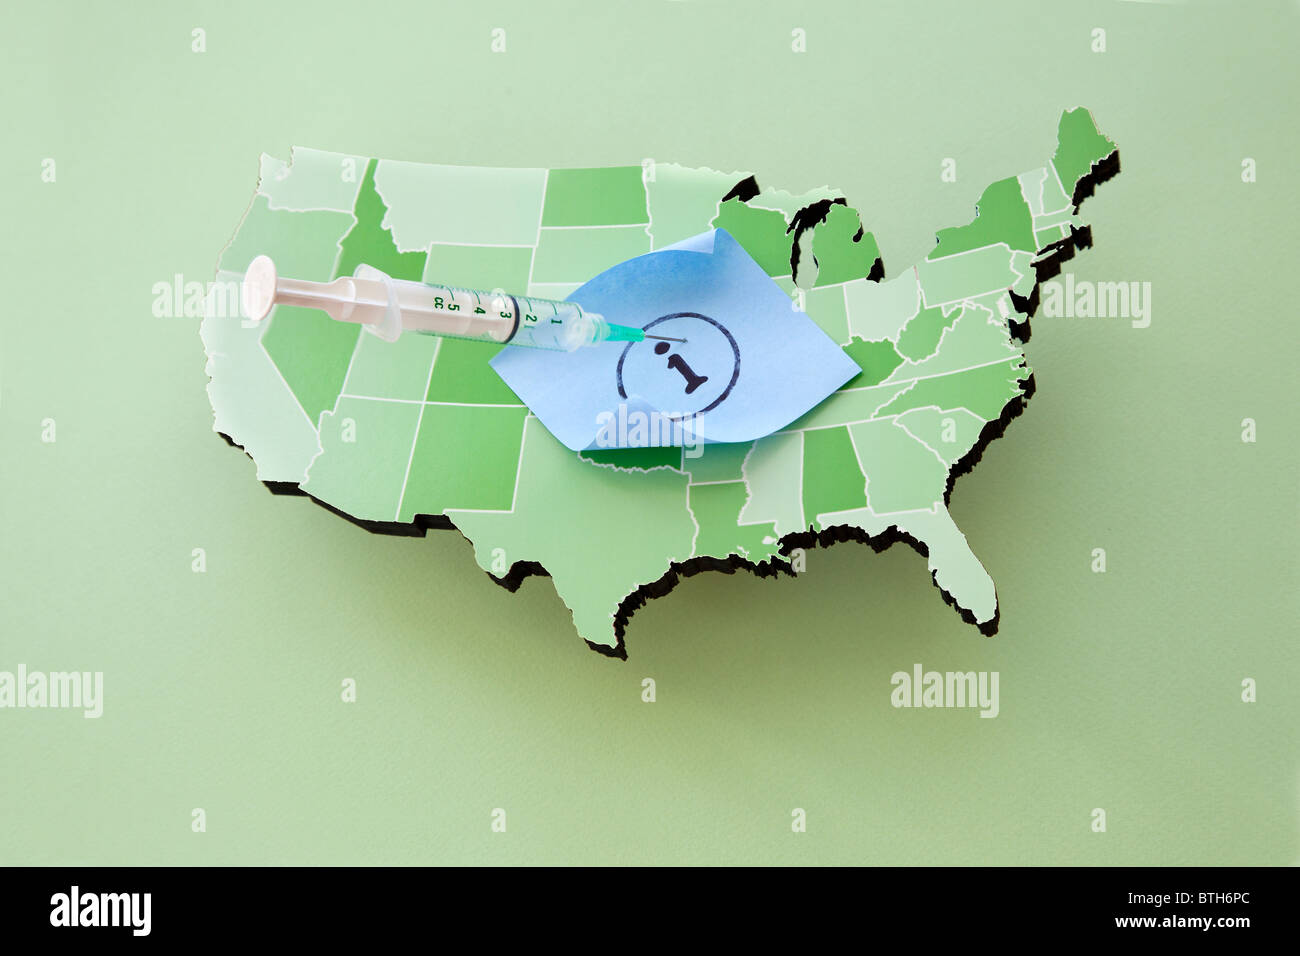 immunization info on US map for immunizations during flu season Stock Photo